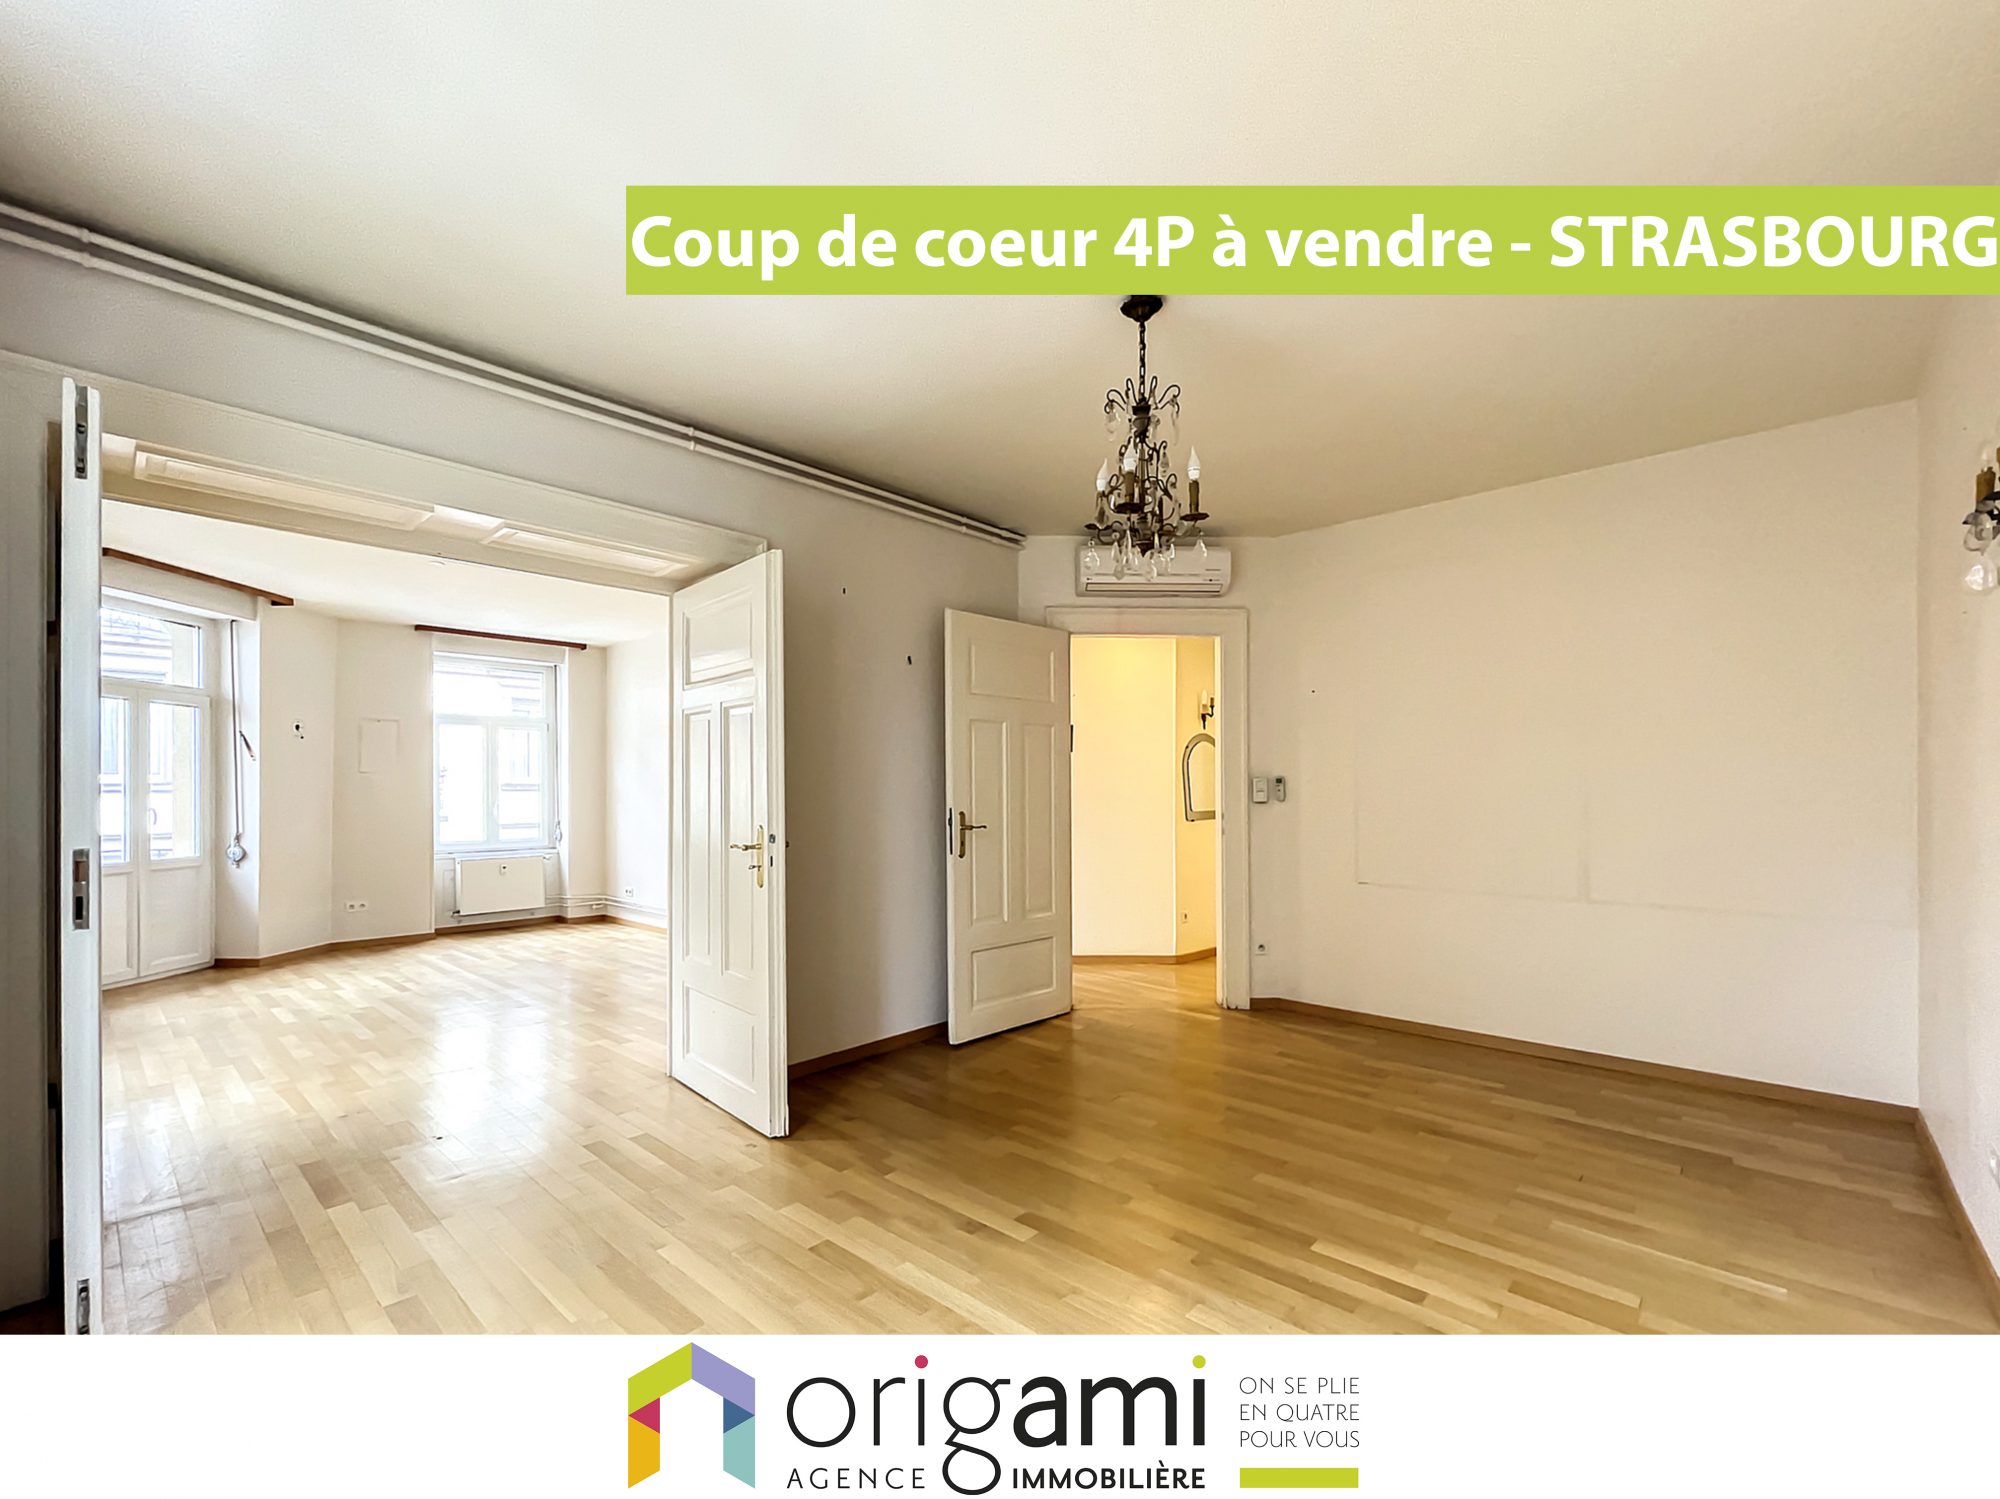 Vente Appartement 103m² 4 Pièces à Strasbourg (67100) - Origami